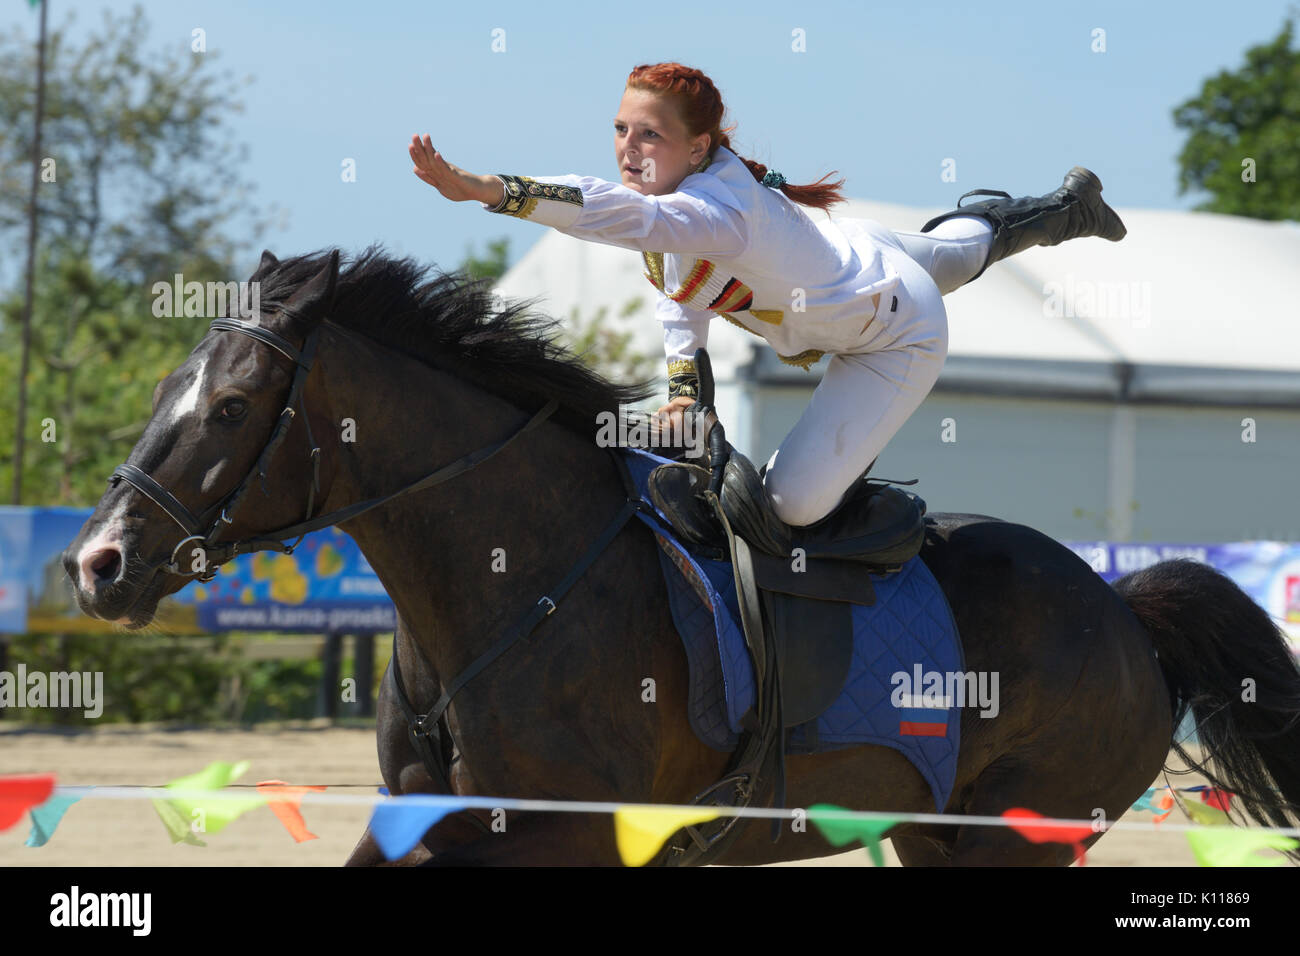 Lytkarino, Moscow region, Russia - July 12, 2014: Maria Kholodova performs stunt during Russian championship in trick riding. Lytkarino housed the Rus Stock Photo